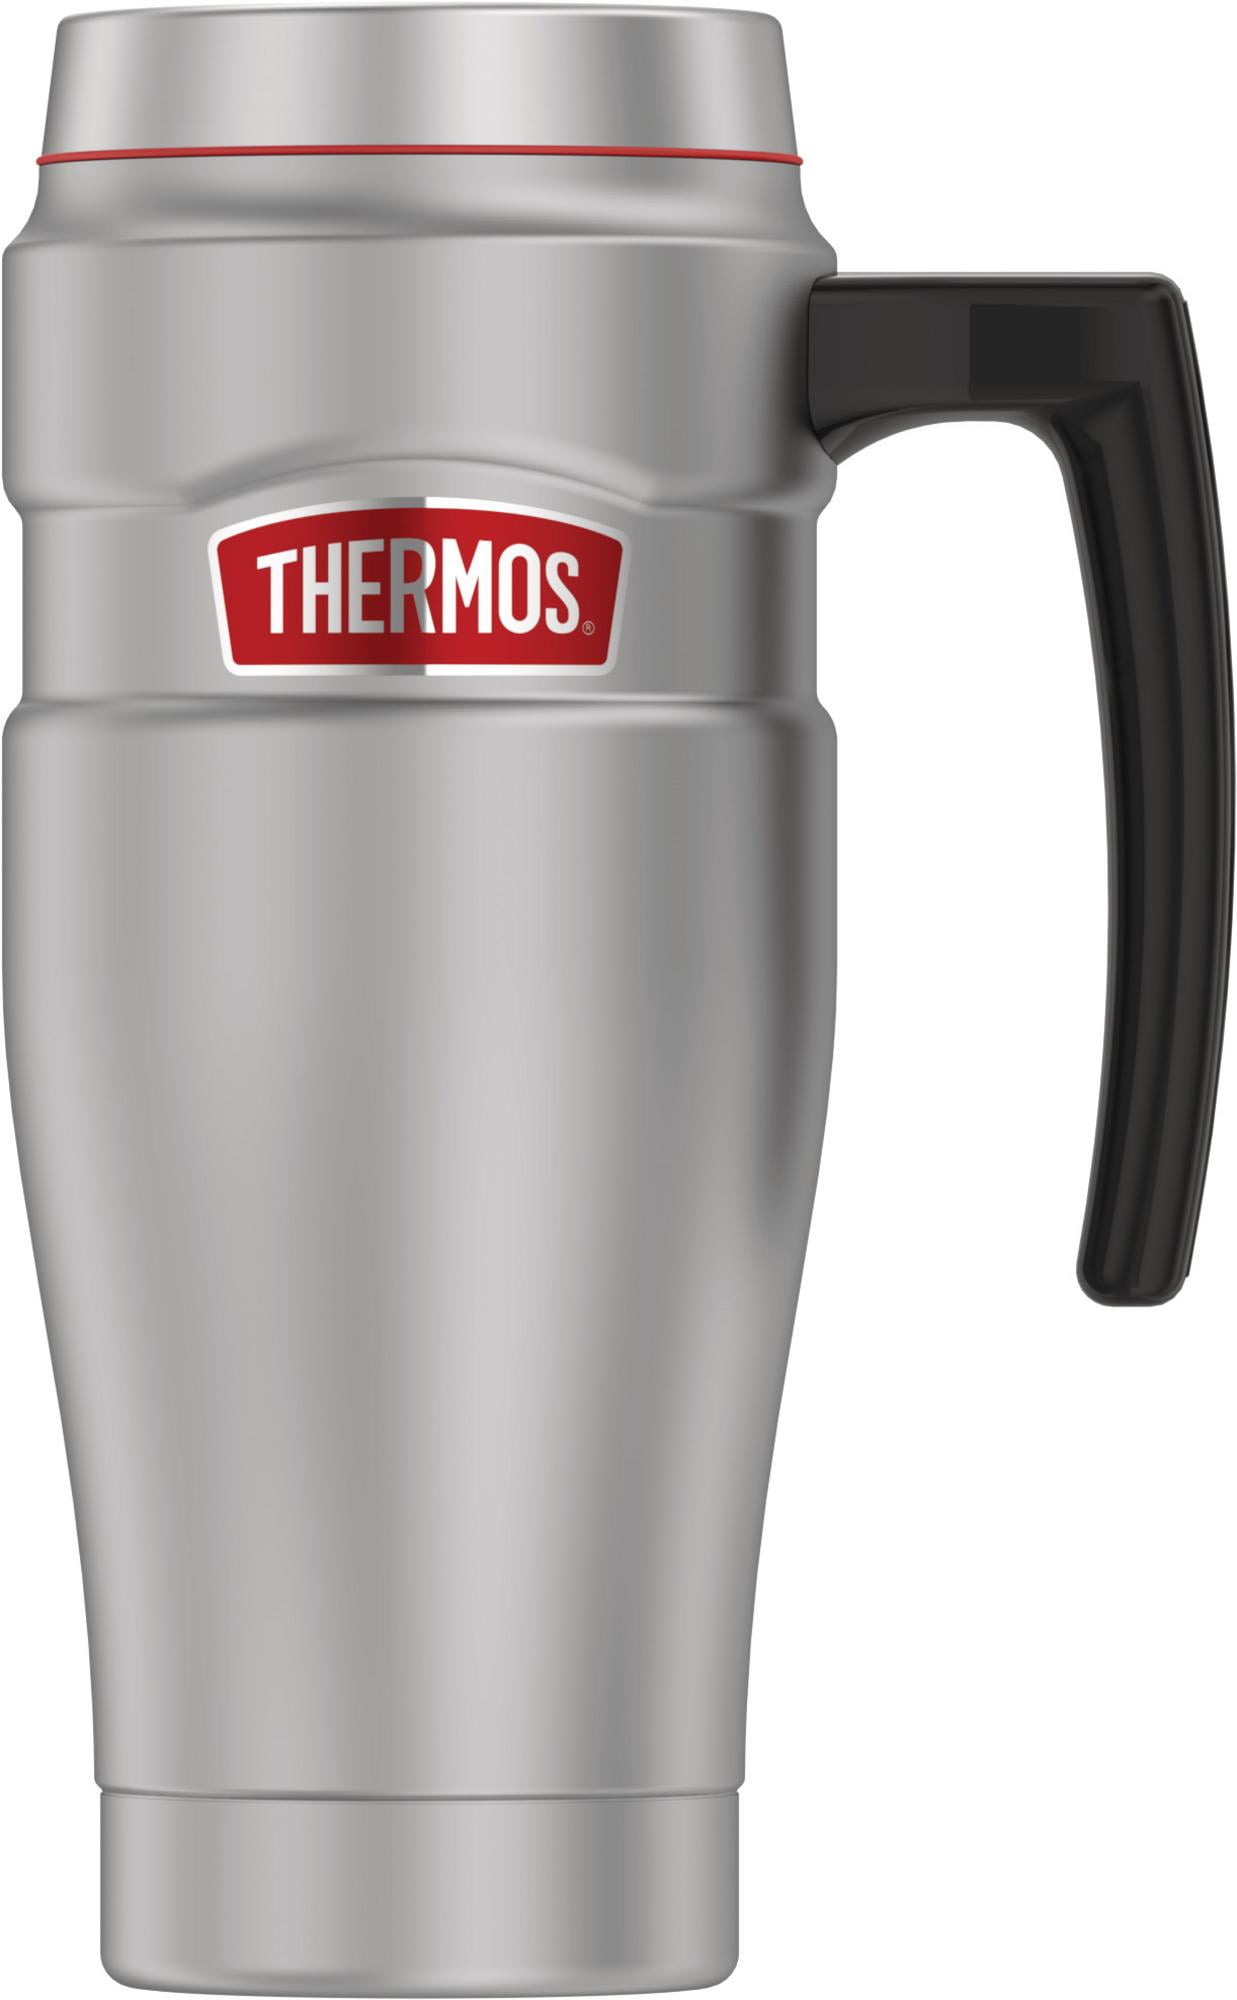 Thermos E5 16-oz Leak-Proof Travel Mug - THRE10500H4 